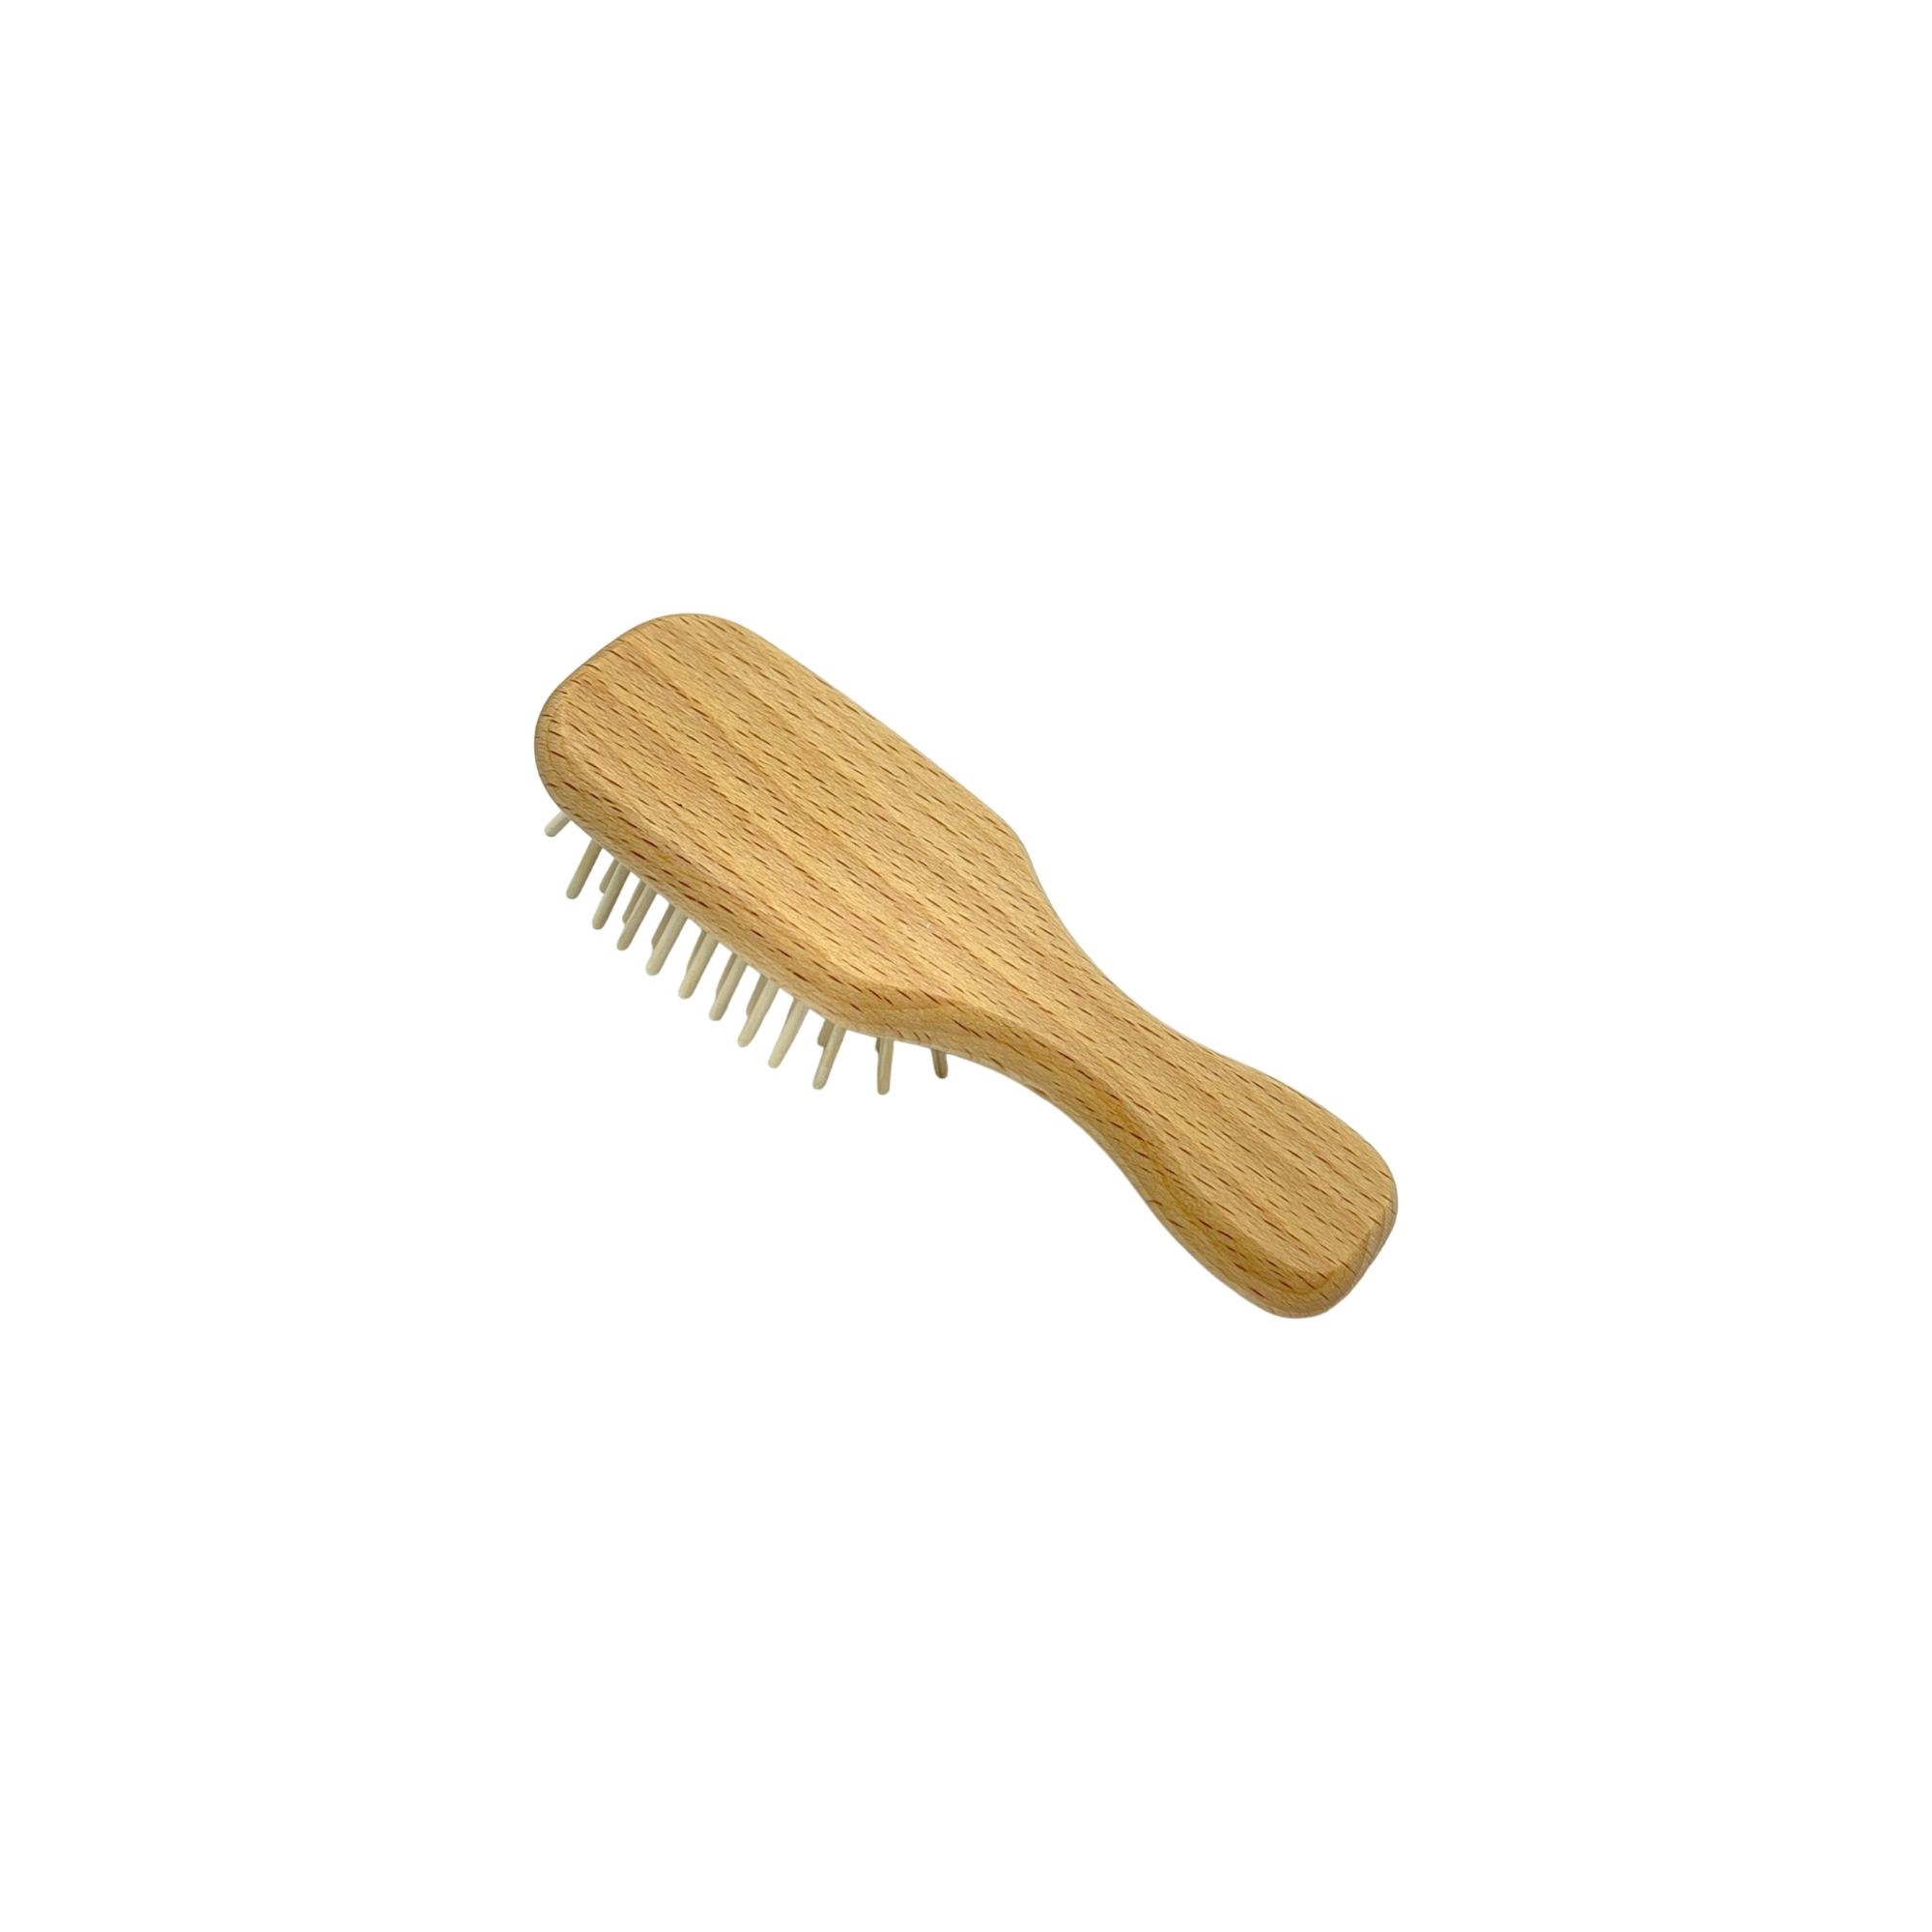 Dural Beech wood rubber cushion mini hair brush with wooden pins